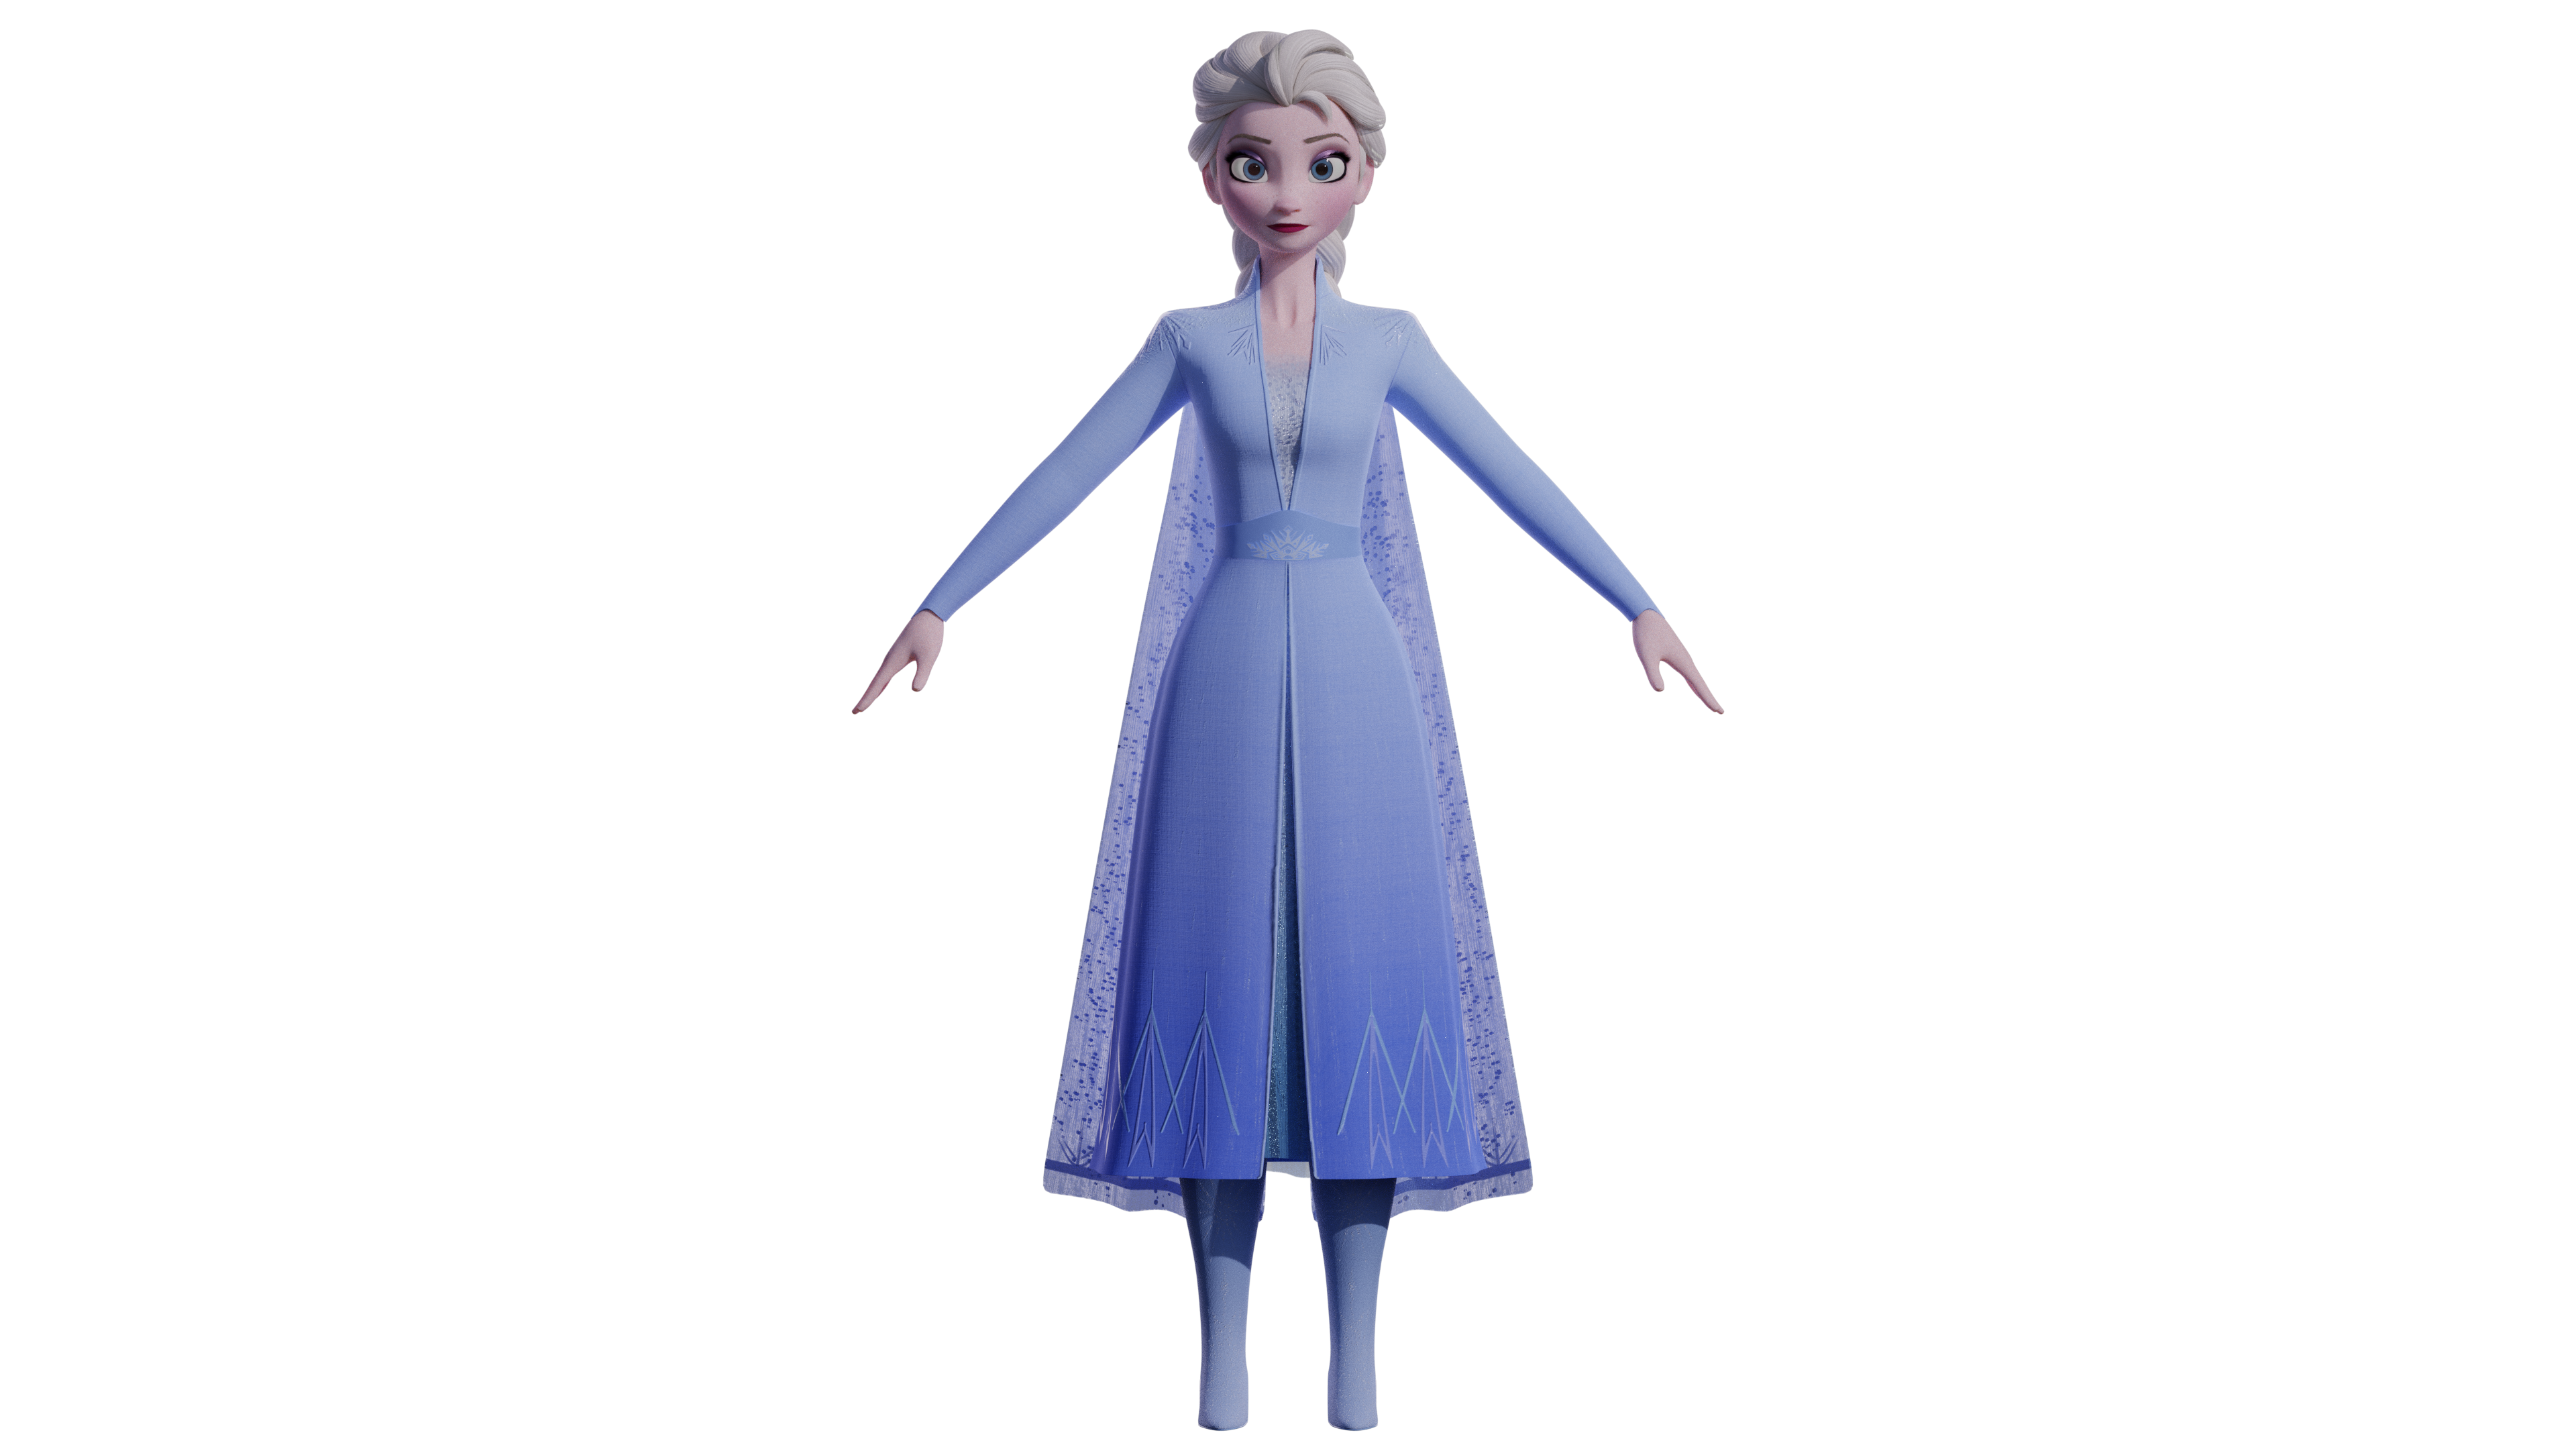 antecedentes madera Agarrar Disney's Frozen 2 Elsa 3d Model (RENDER TEST) by King-Of-Snow on DeviantArt